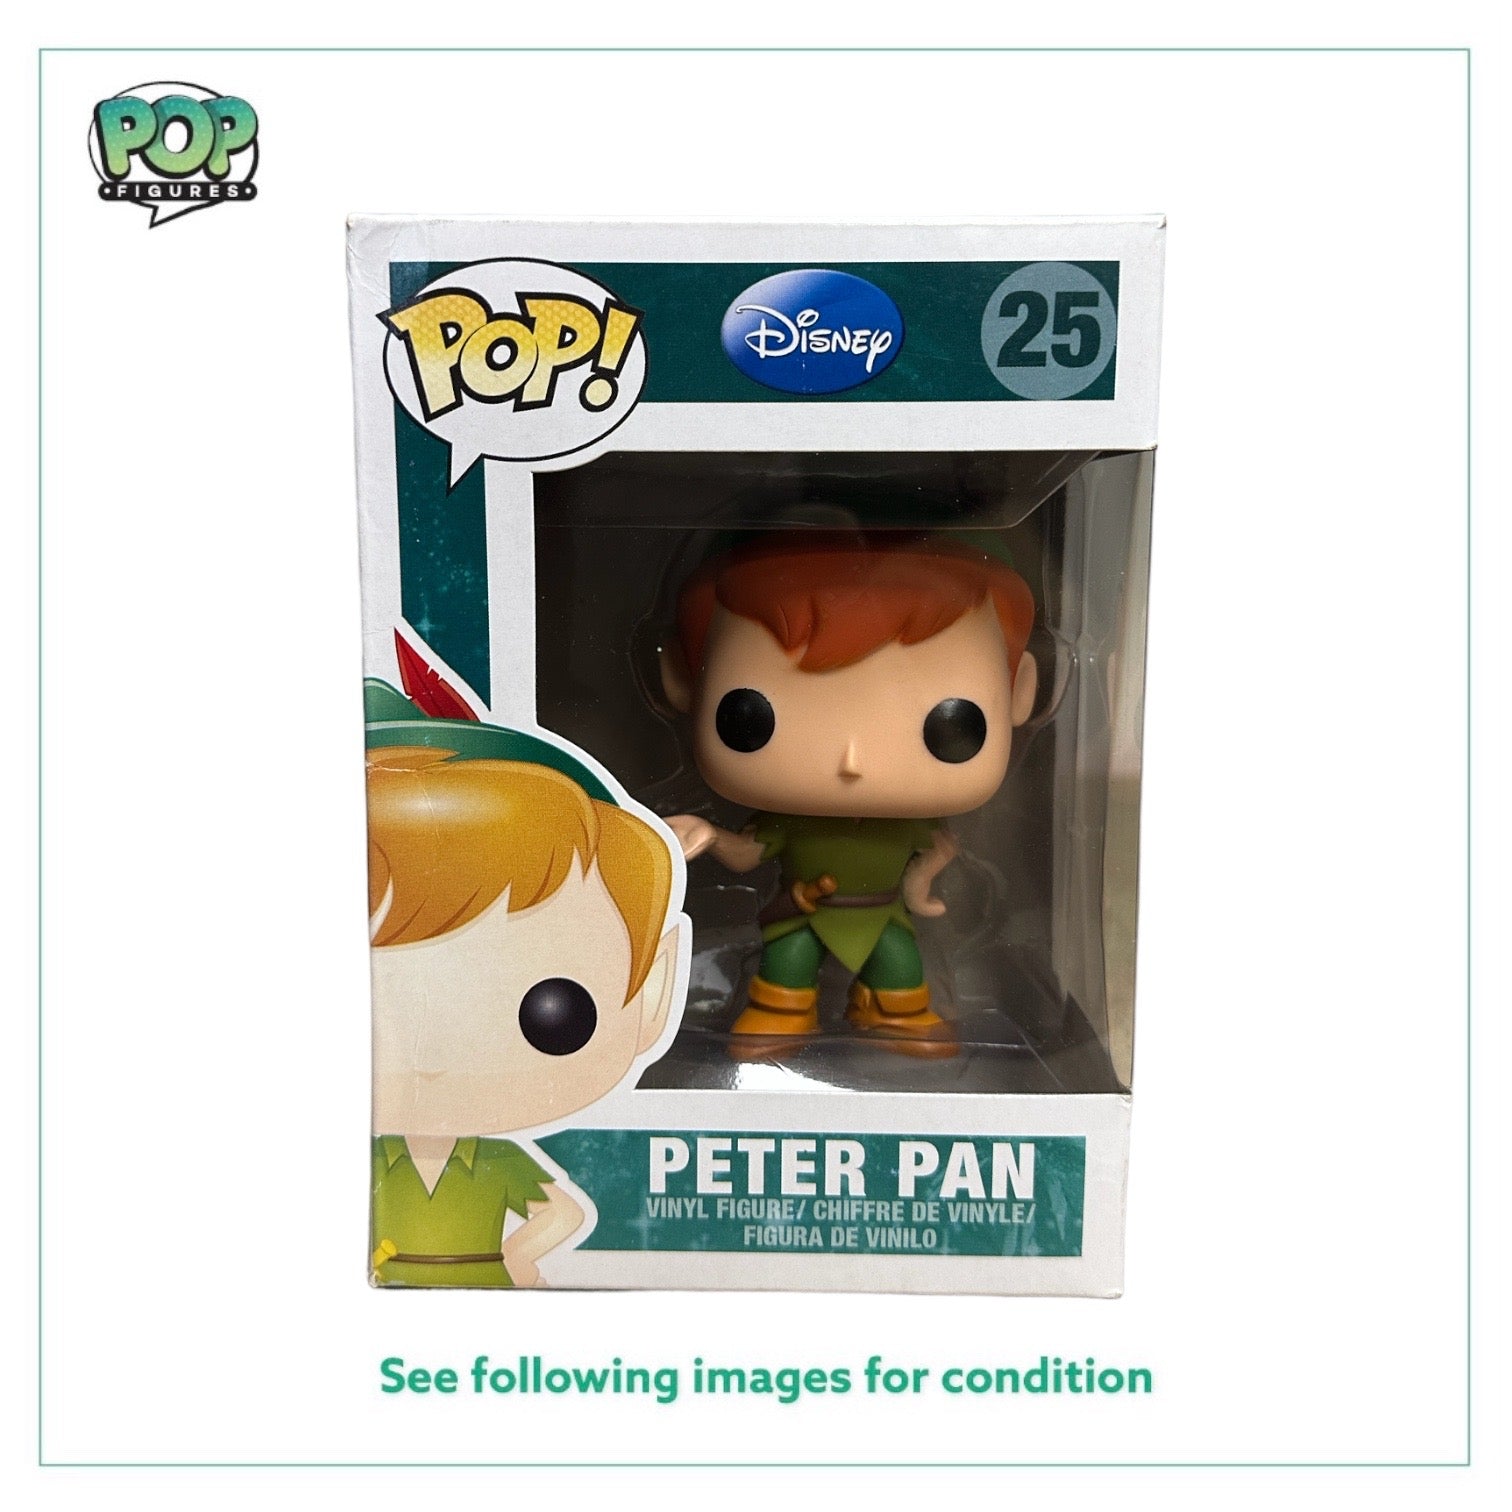 Peter Pan #25 Funko Pop! - Disney Series 3 - 2013 Pop! - Condition 6/10